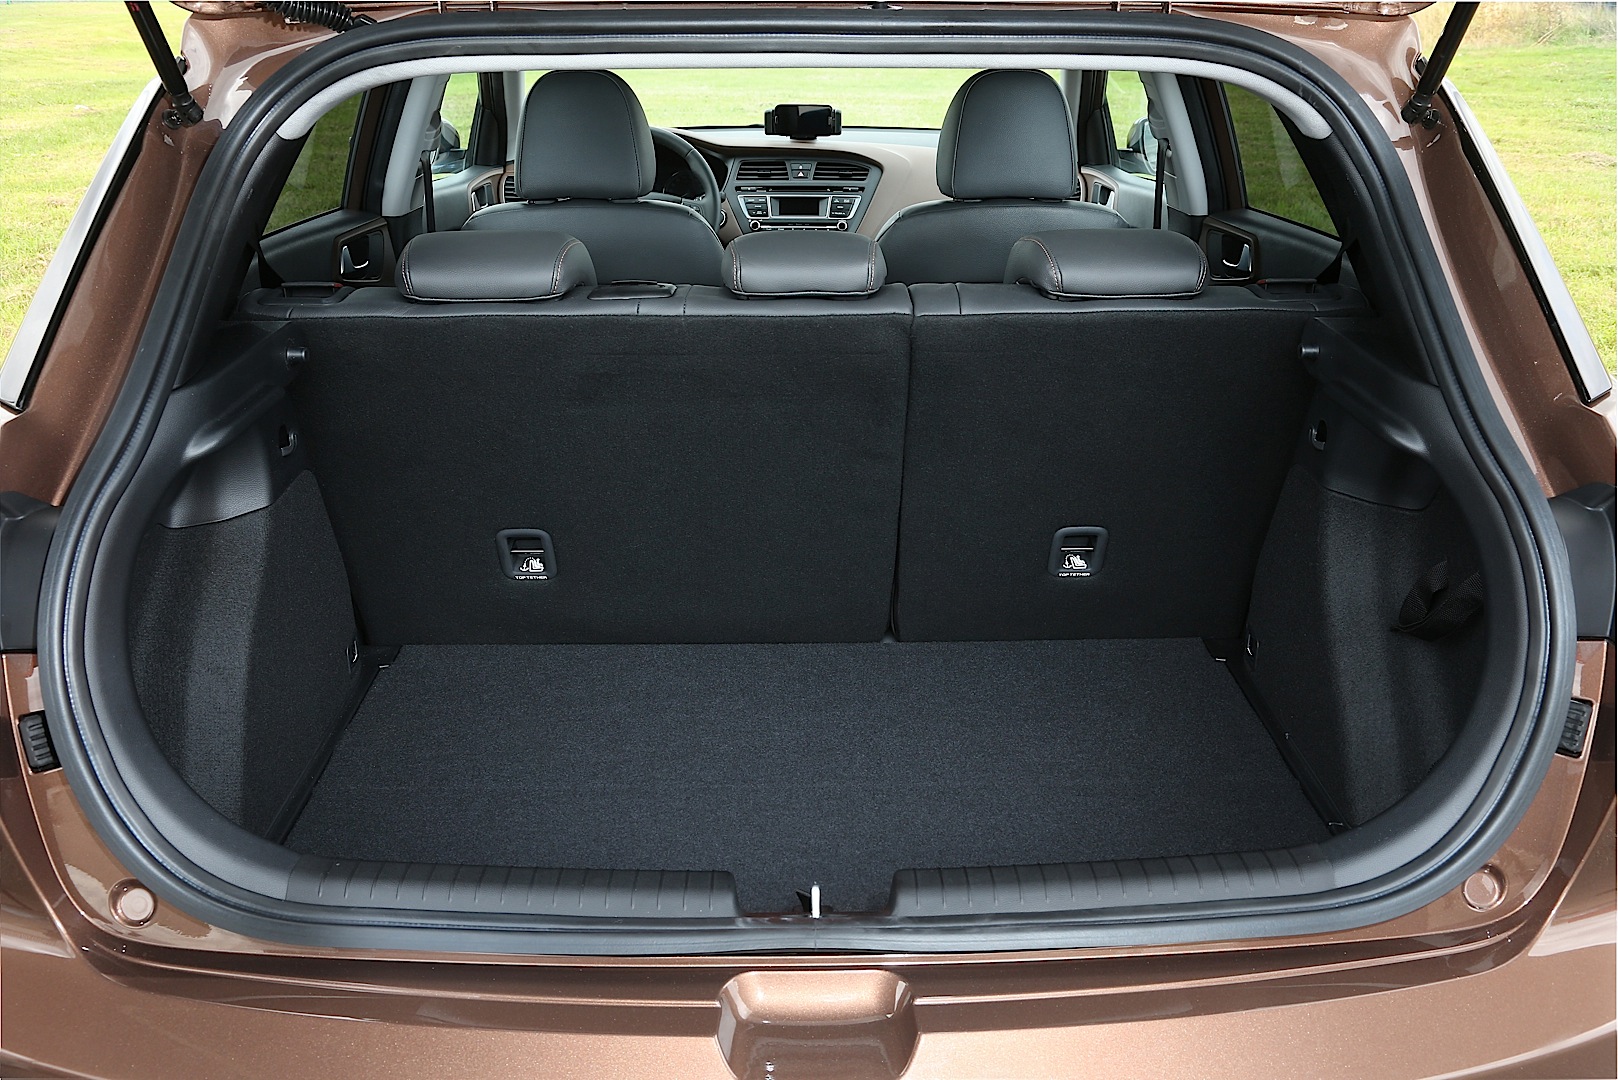 All New Hyundai I20 Interior Detailed Autoevolution